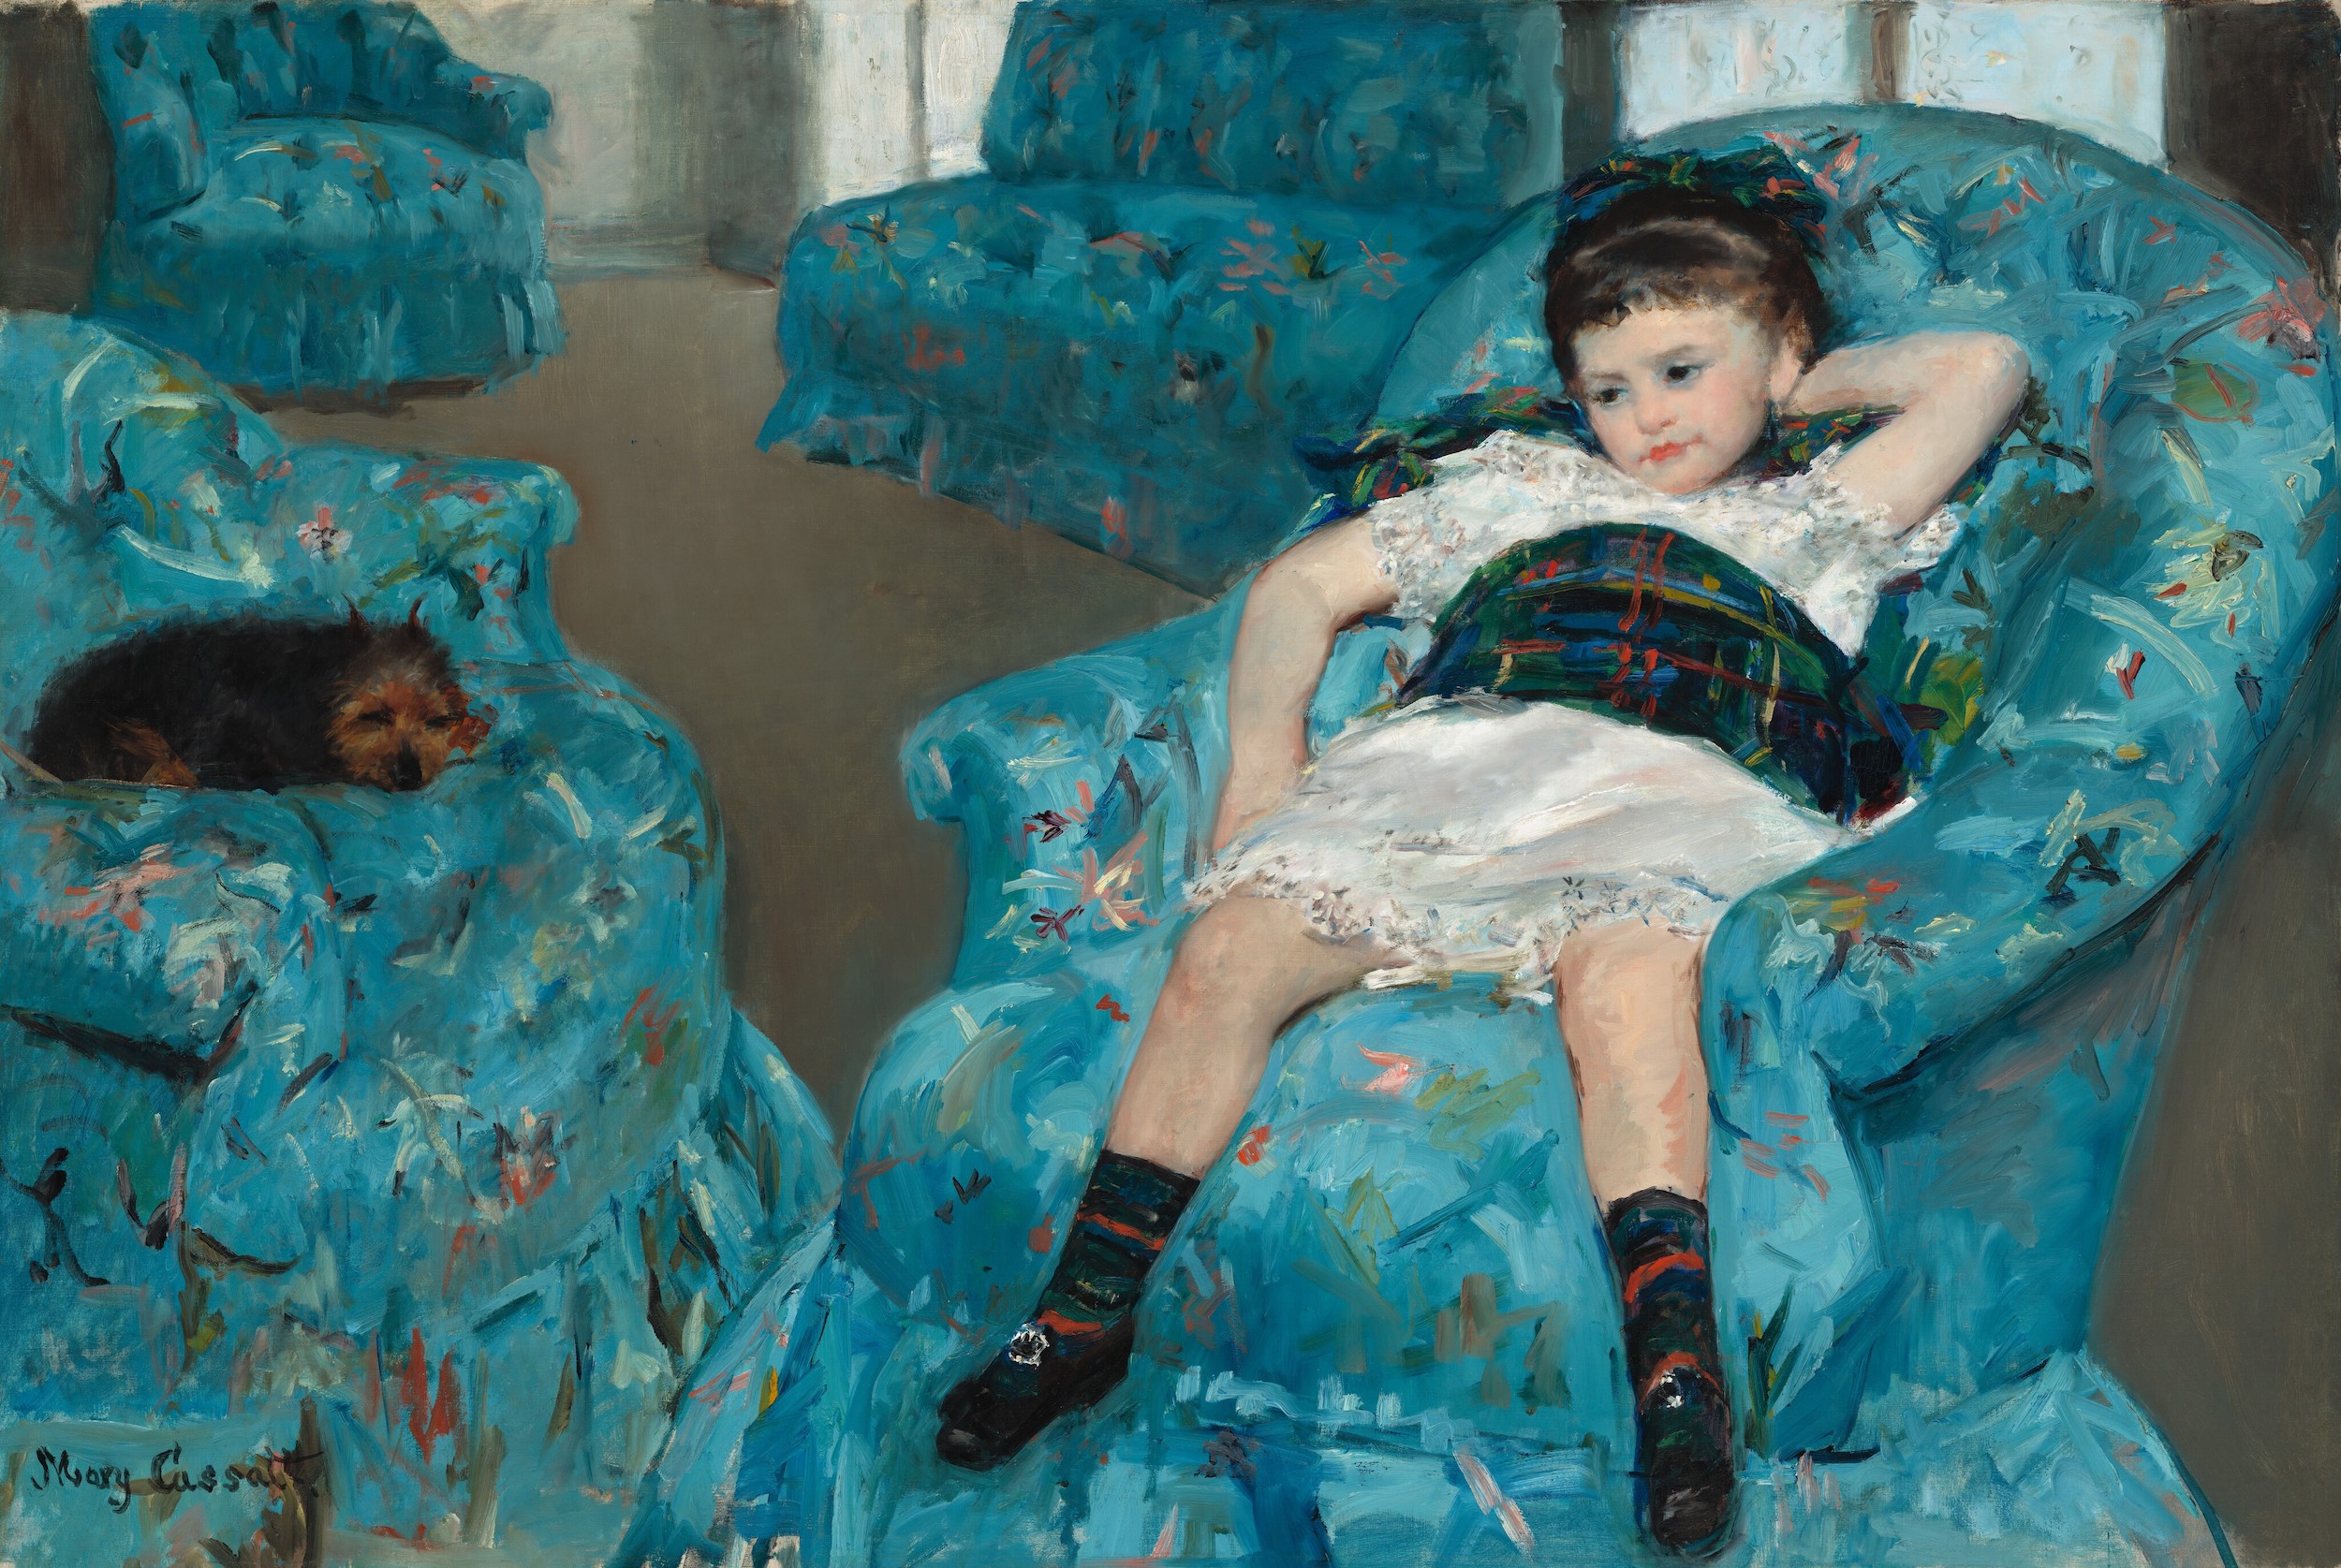 Little Girl in a Blue Armchair by Mary Cassatt - 1878 - 129.8 x 89.5 cm National Gallery of Art